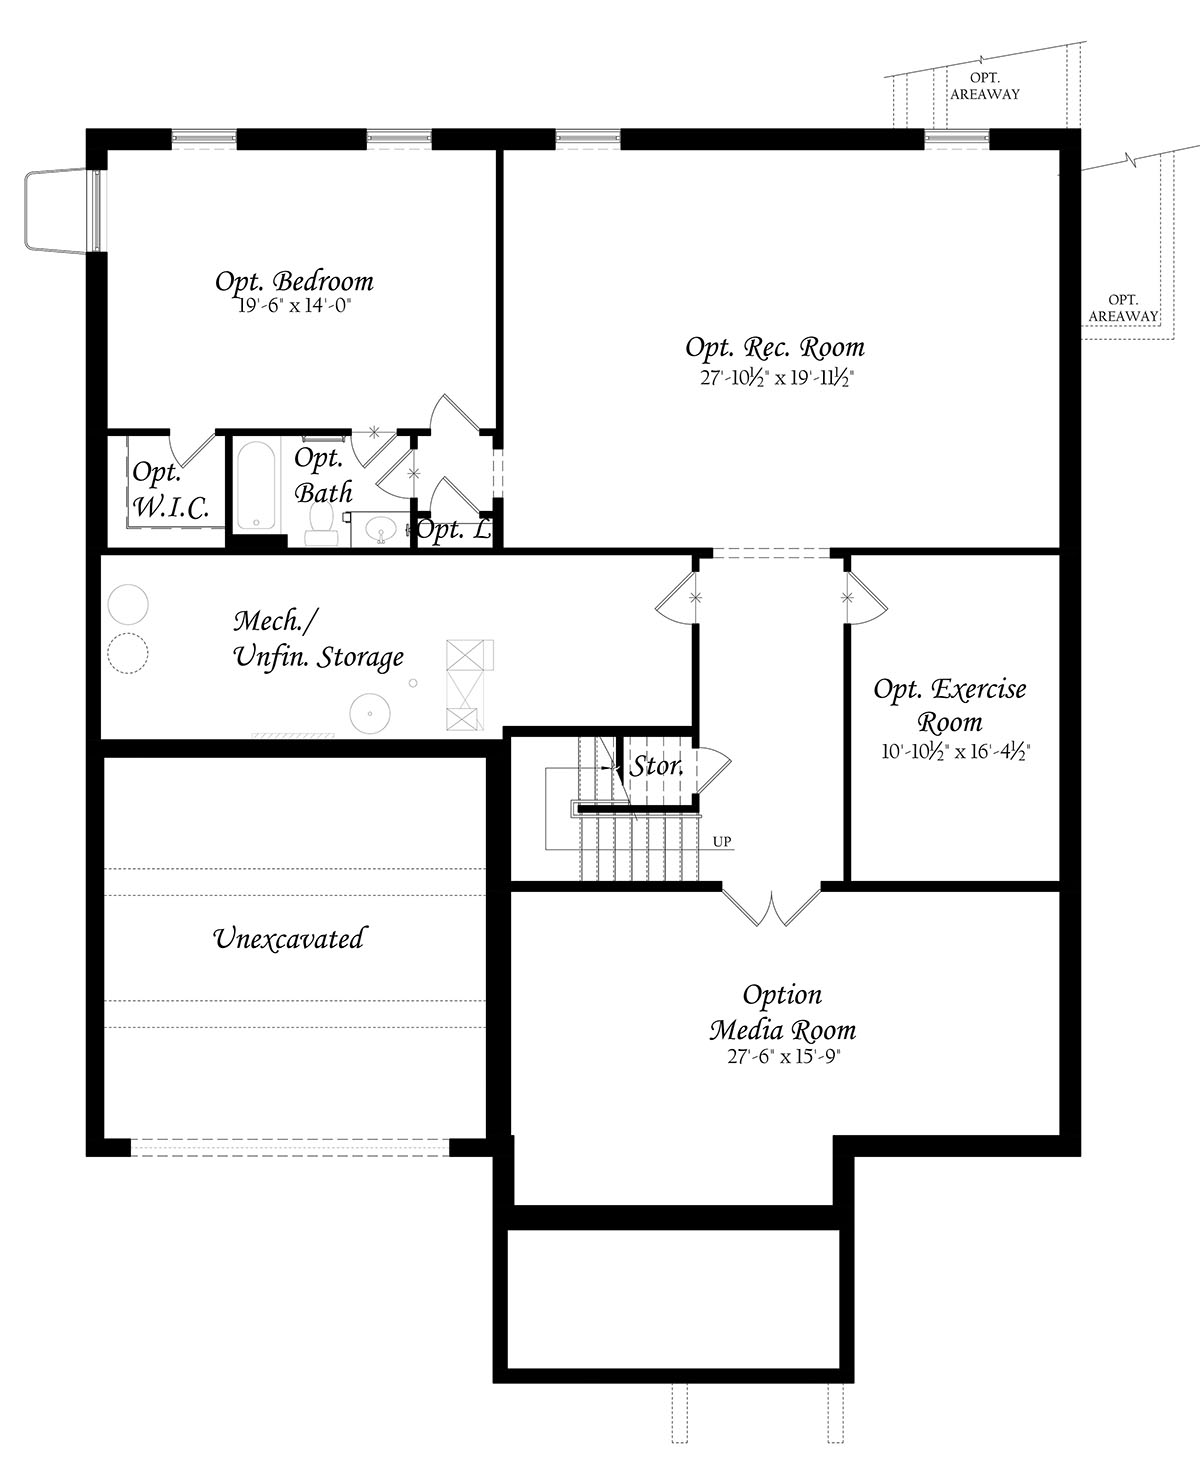 Opt. Second Floor Plan Evergreene Homes